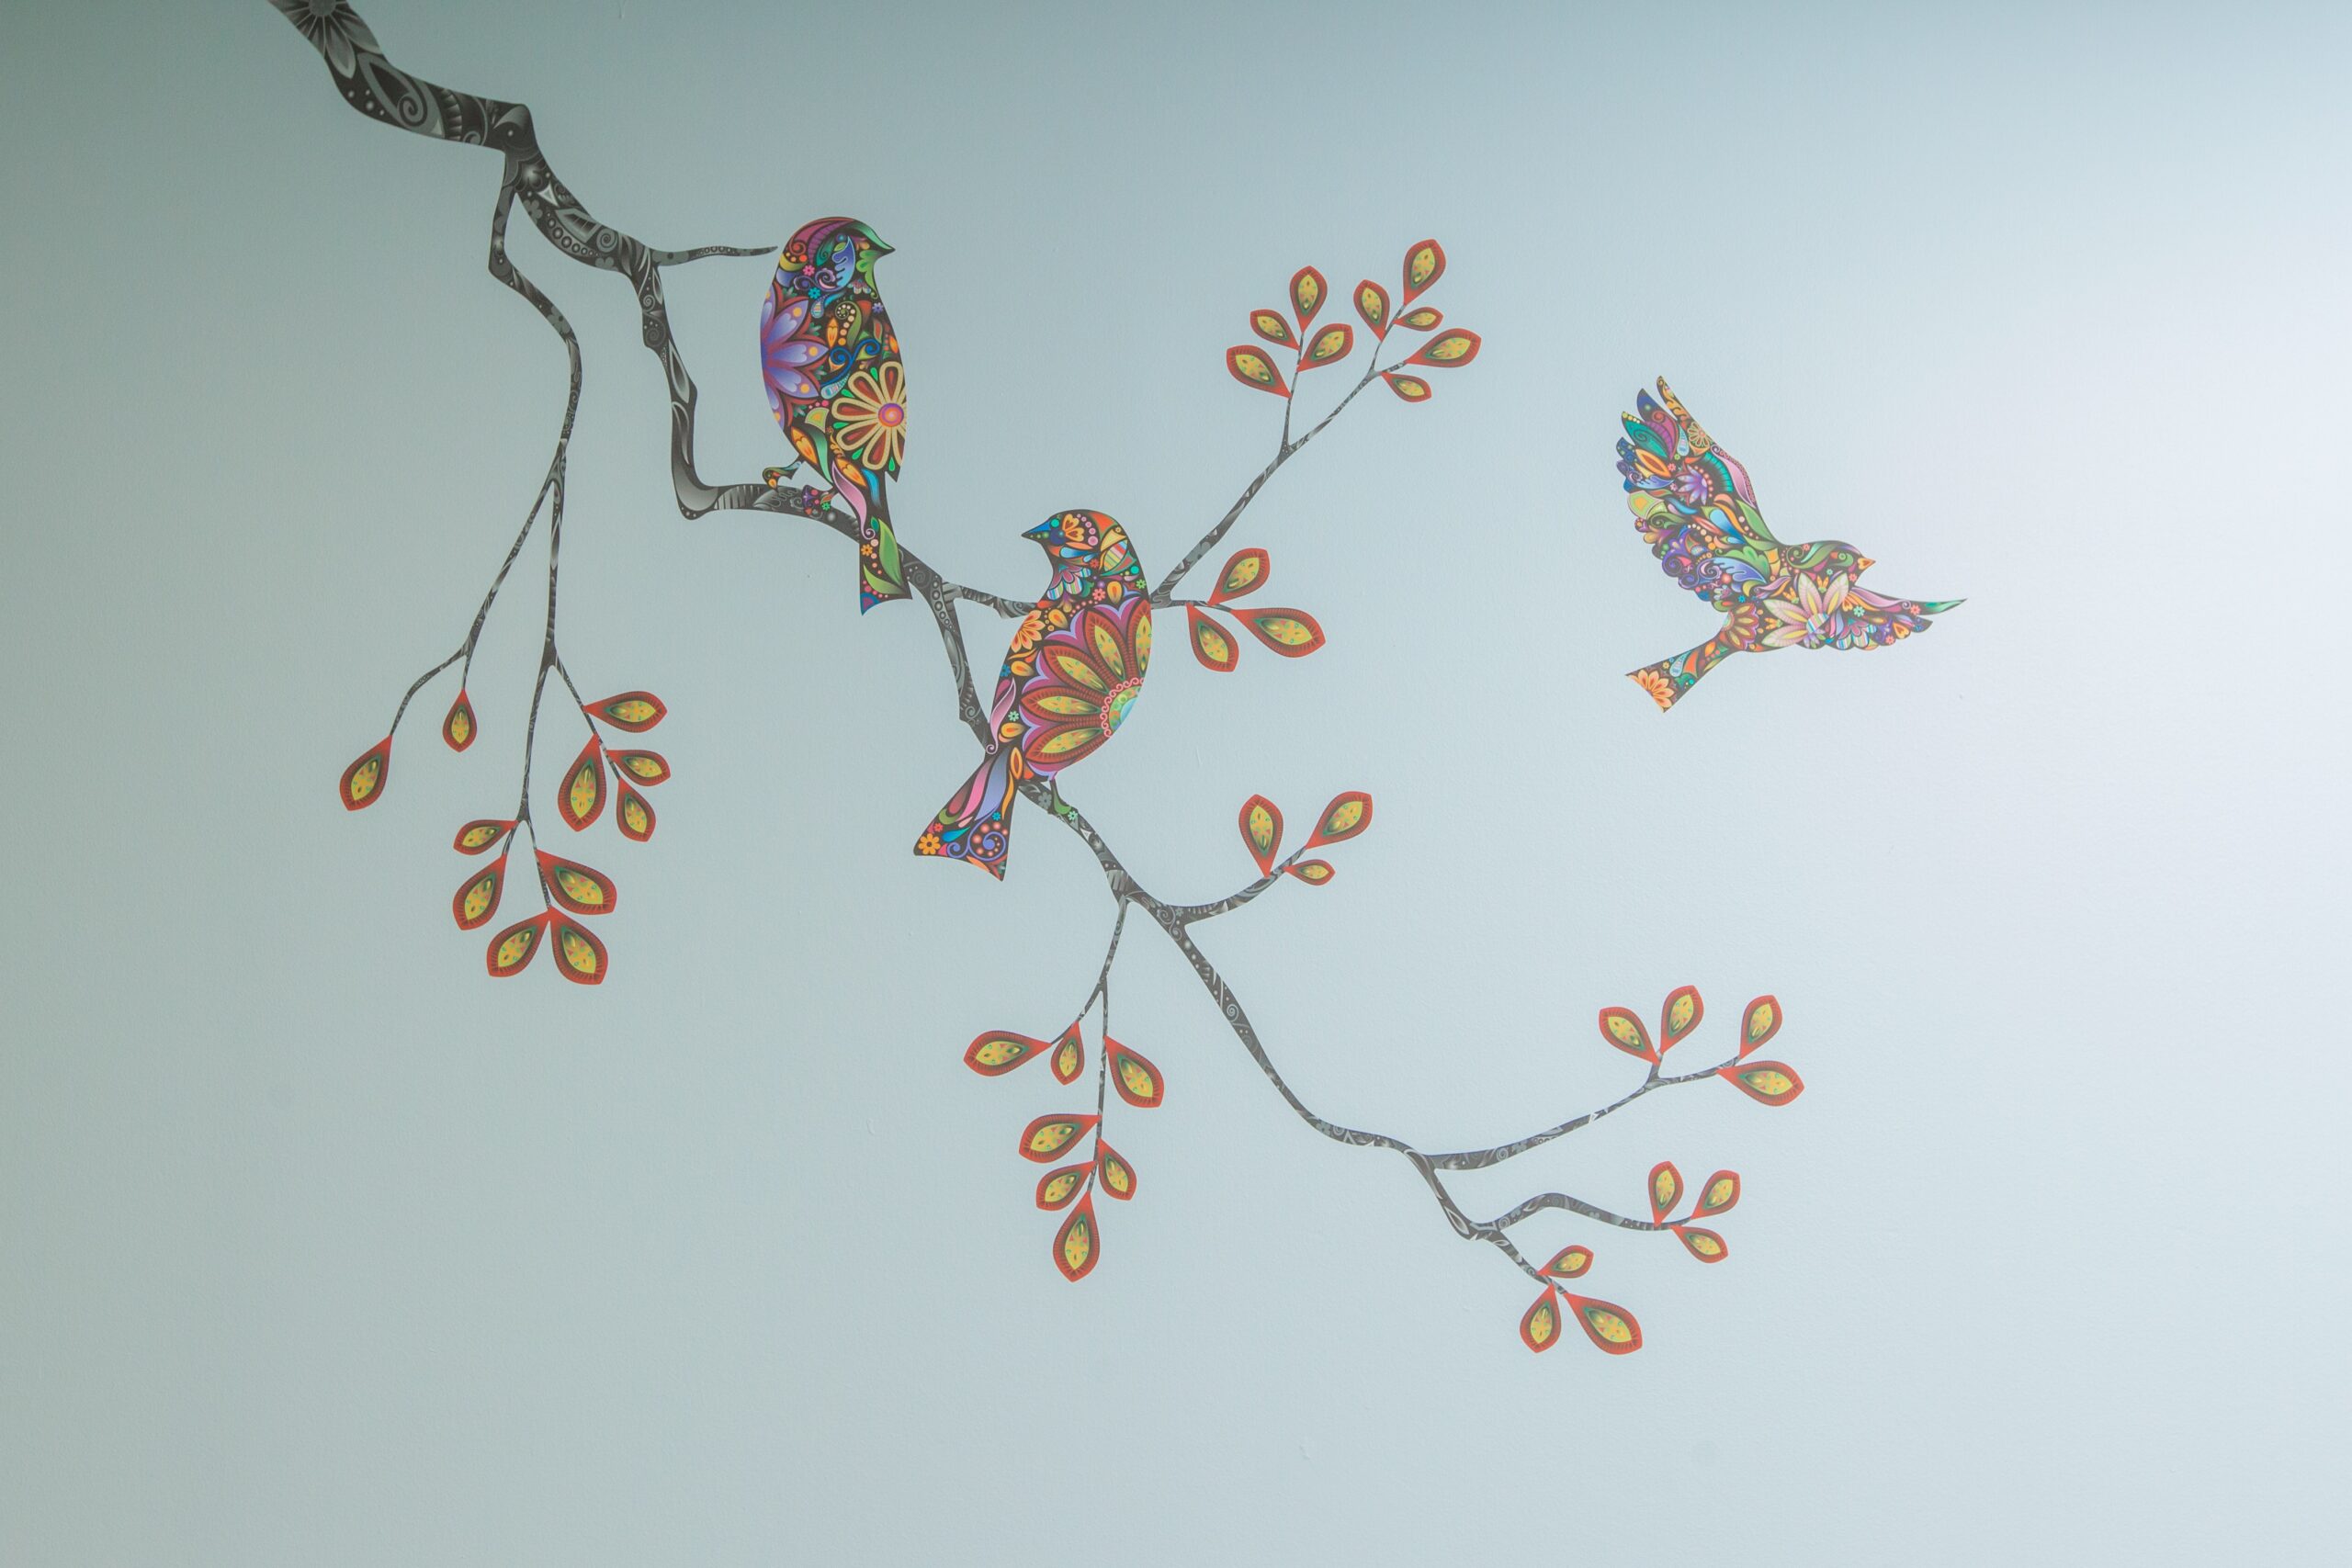 Florida Facilities birds and branches decor on a wall